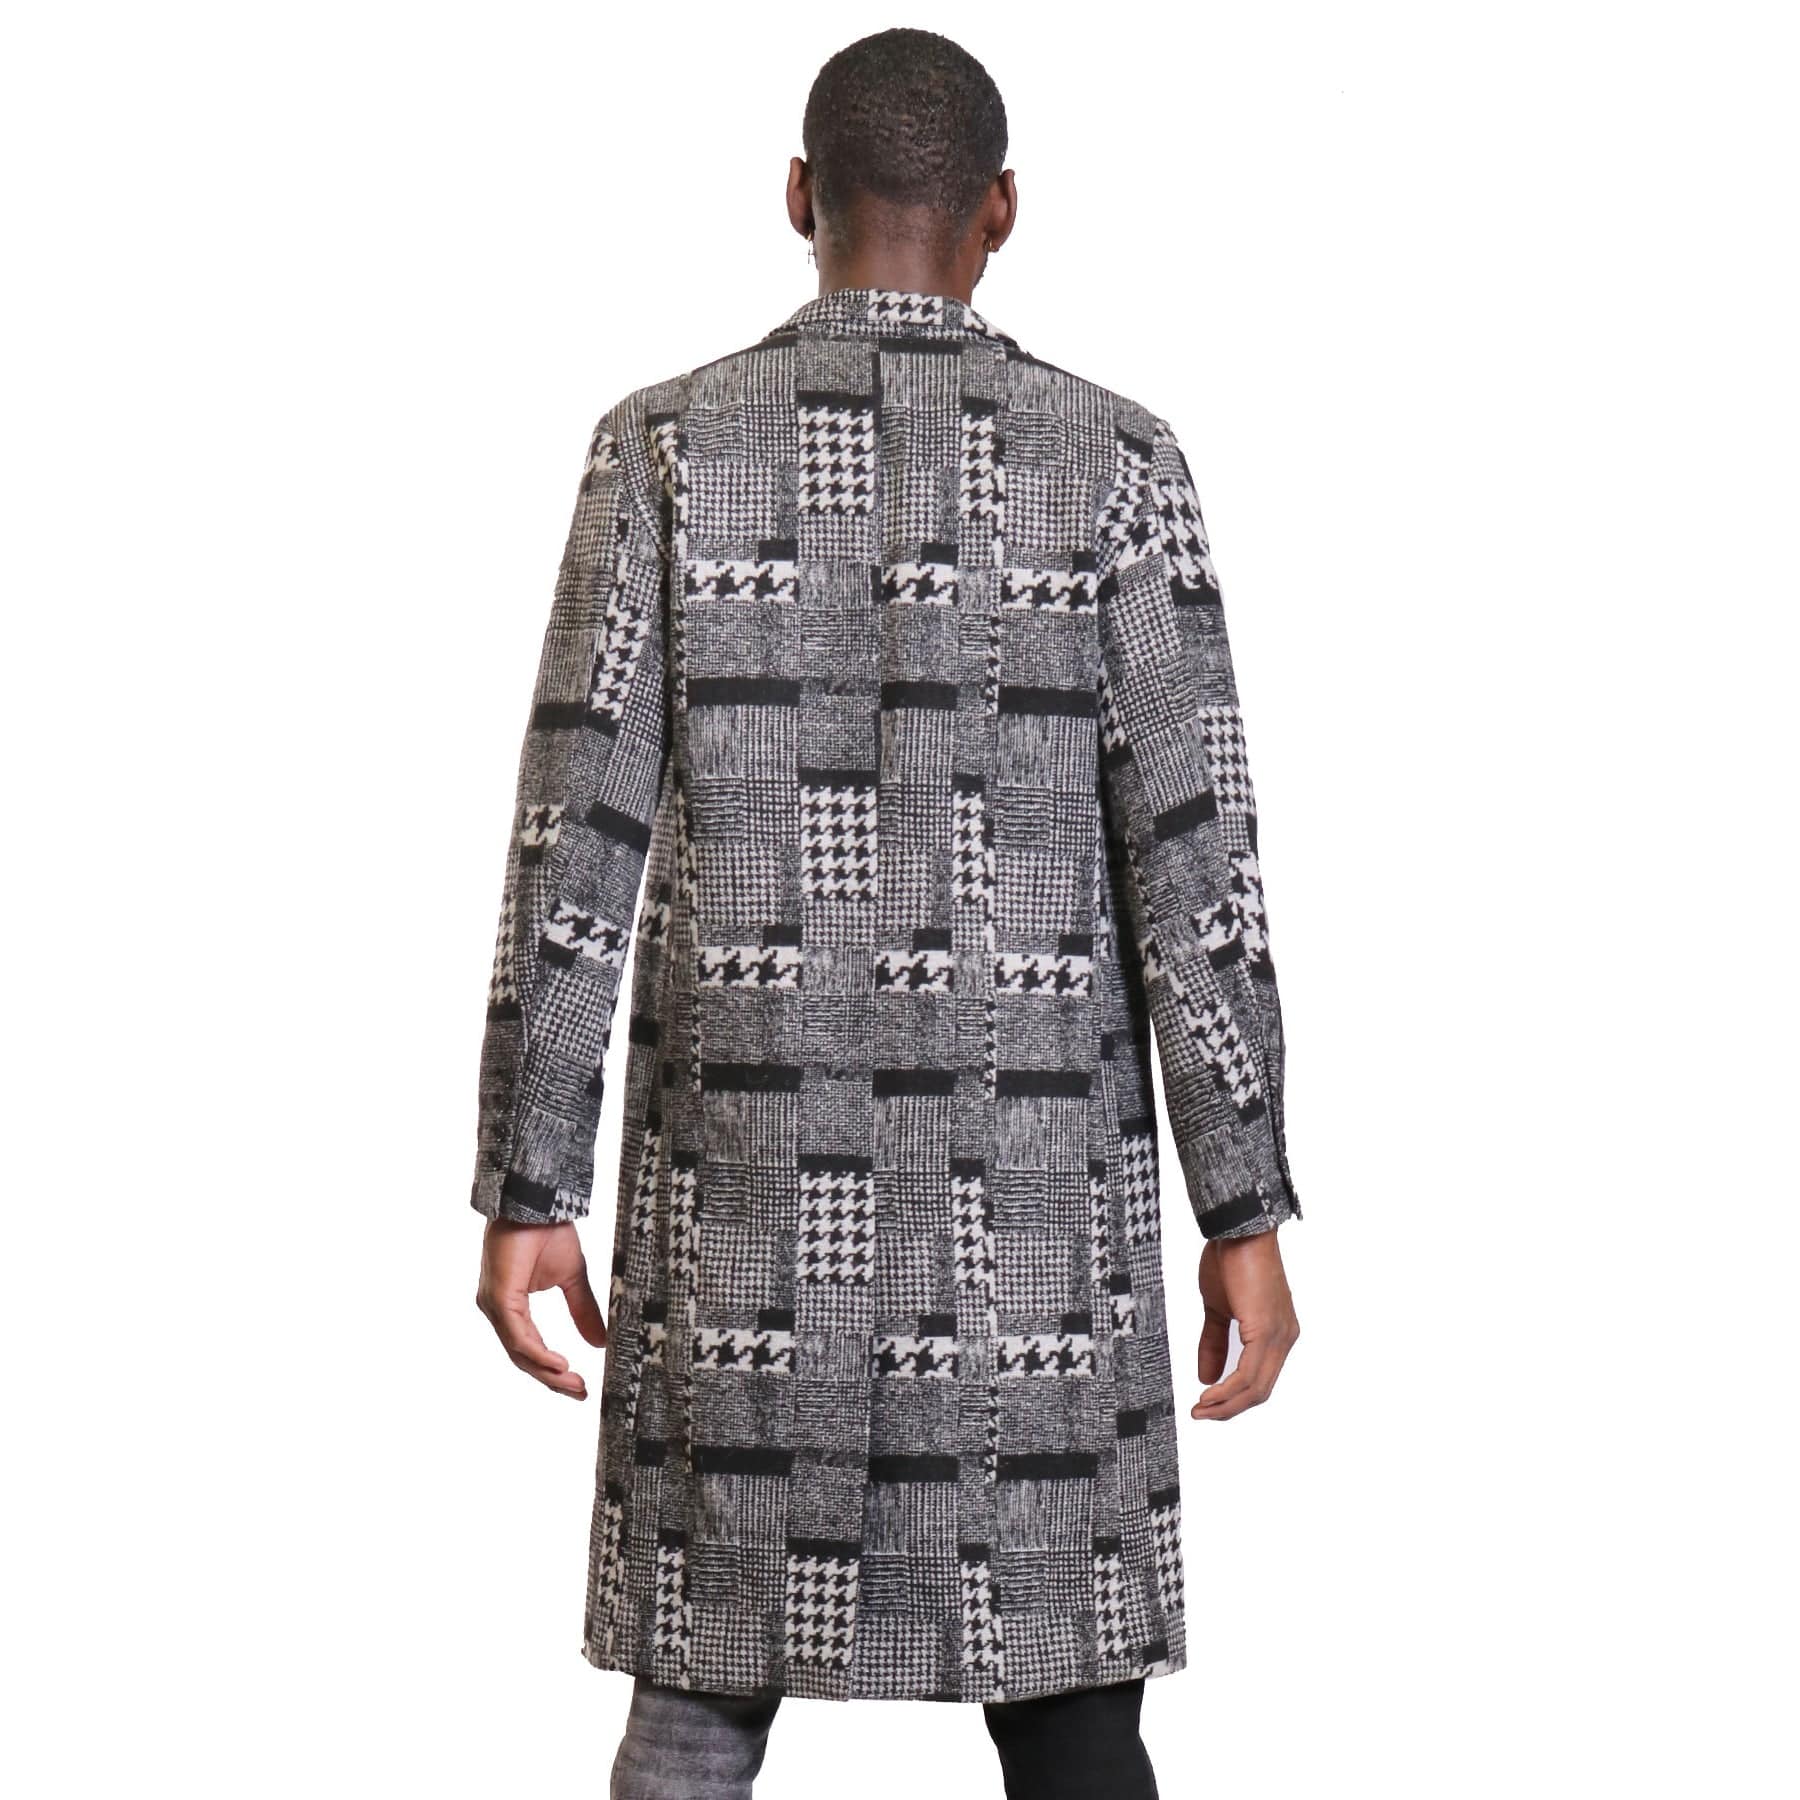 AMILLION BY KLEEP Men's Jacket Amillion by KLEEP Neo Patchwork Wool Coat